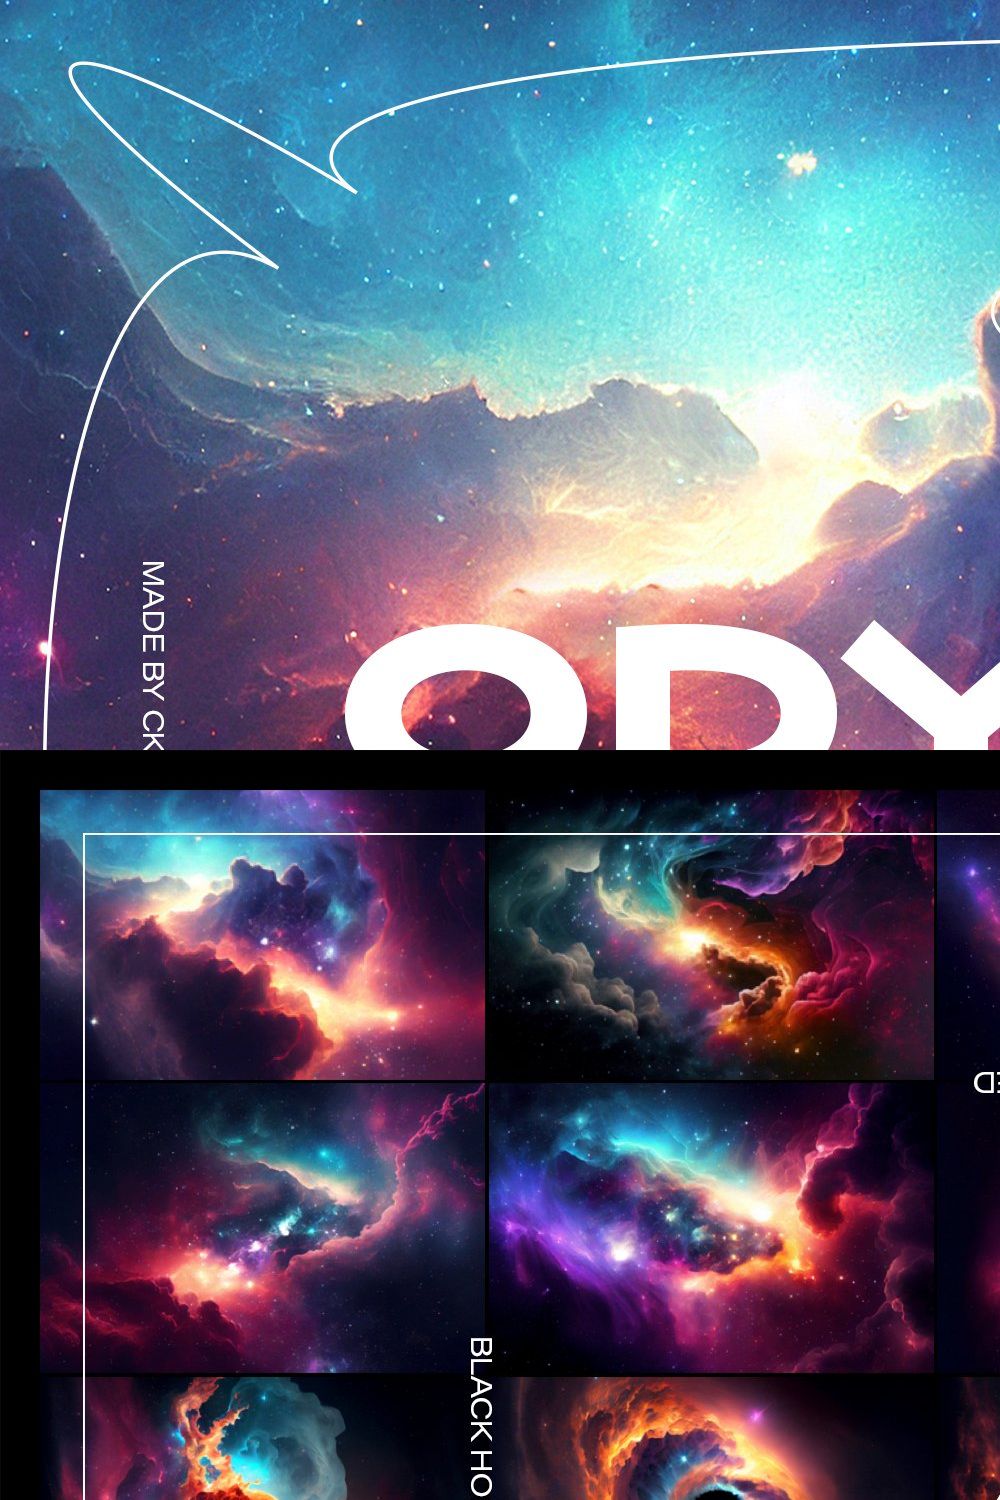 Odyssey | Nebula Backgrounds, Extras pinterest preview image.